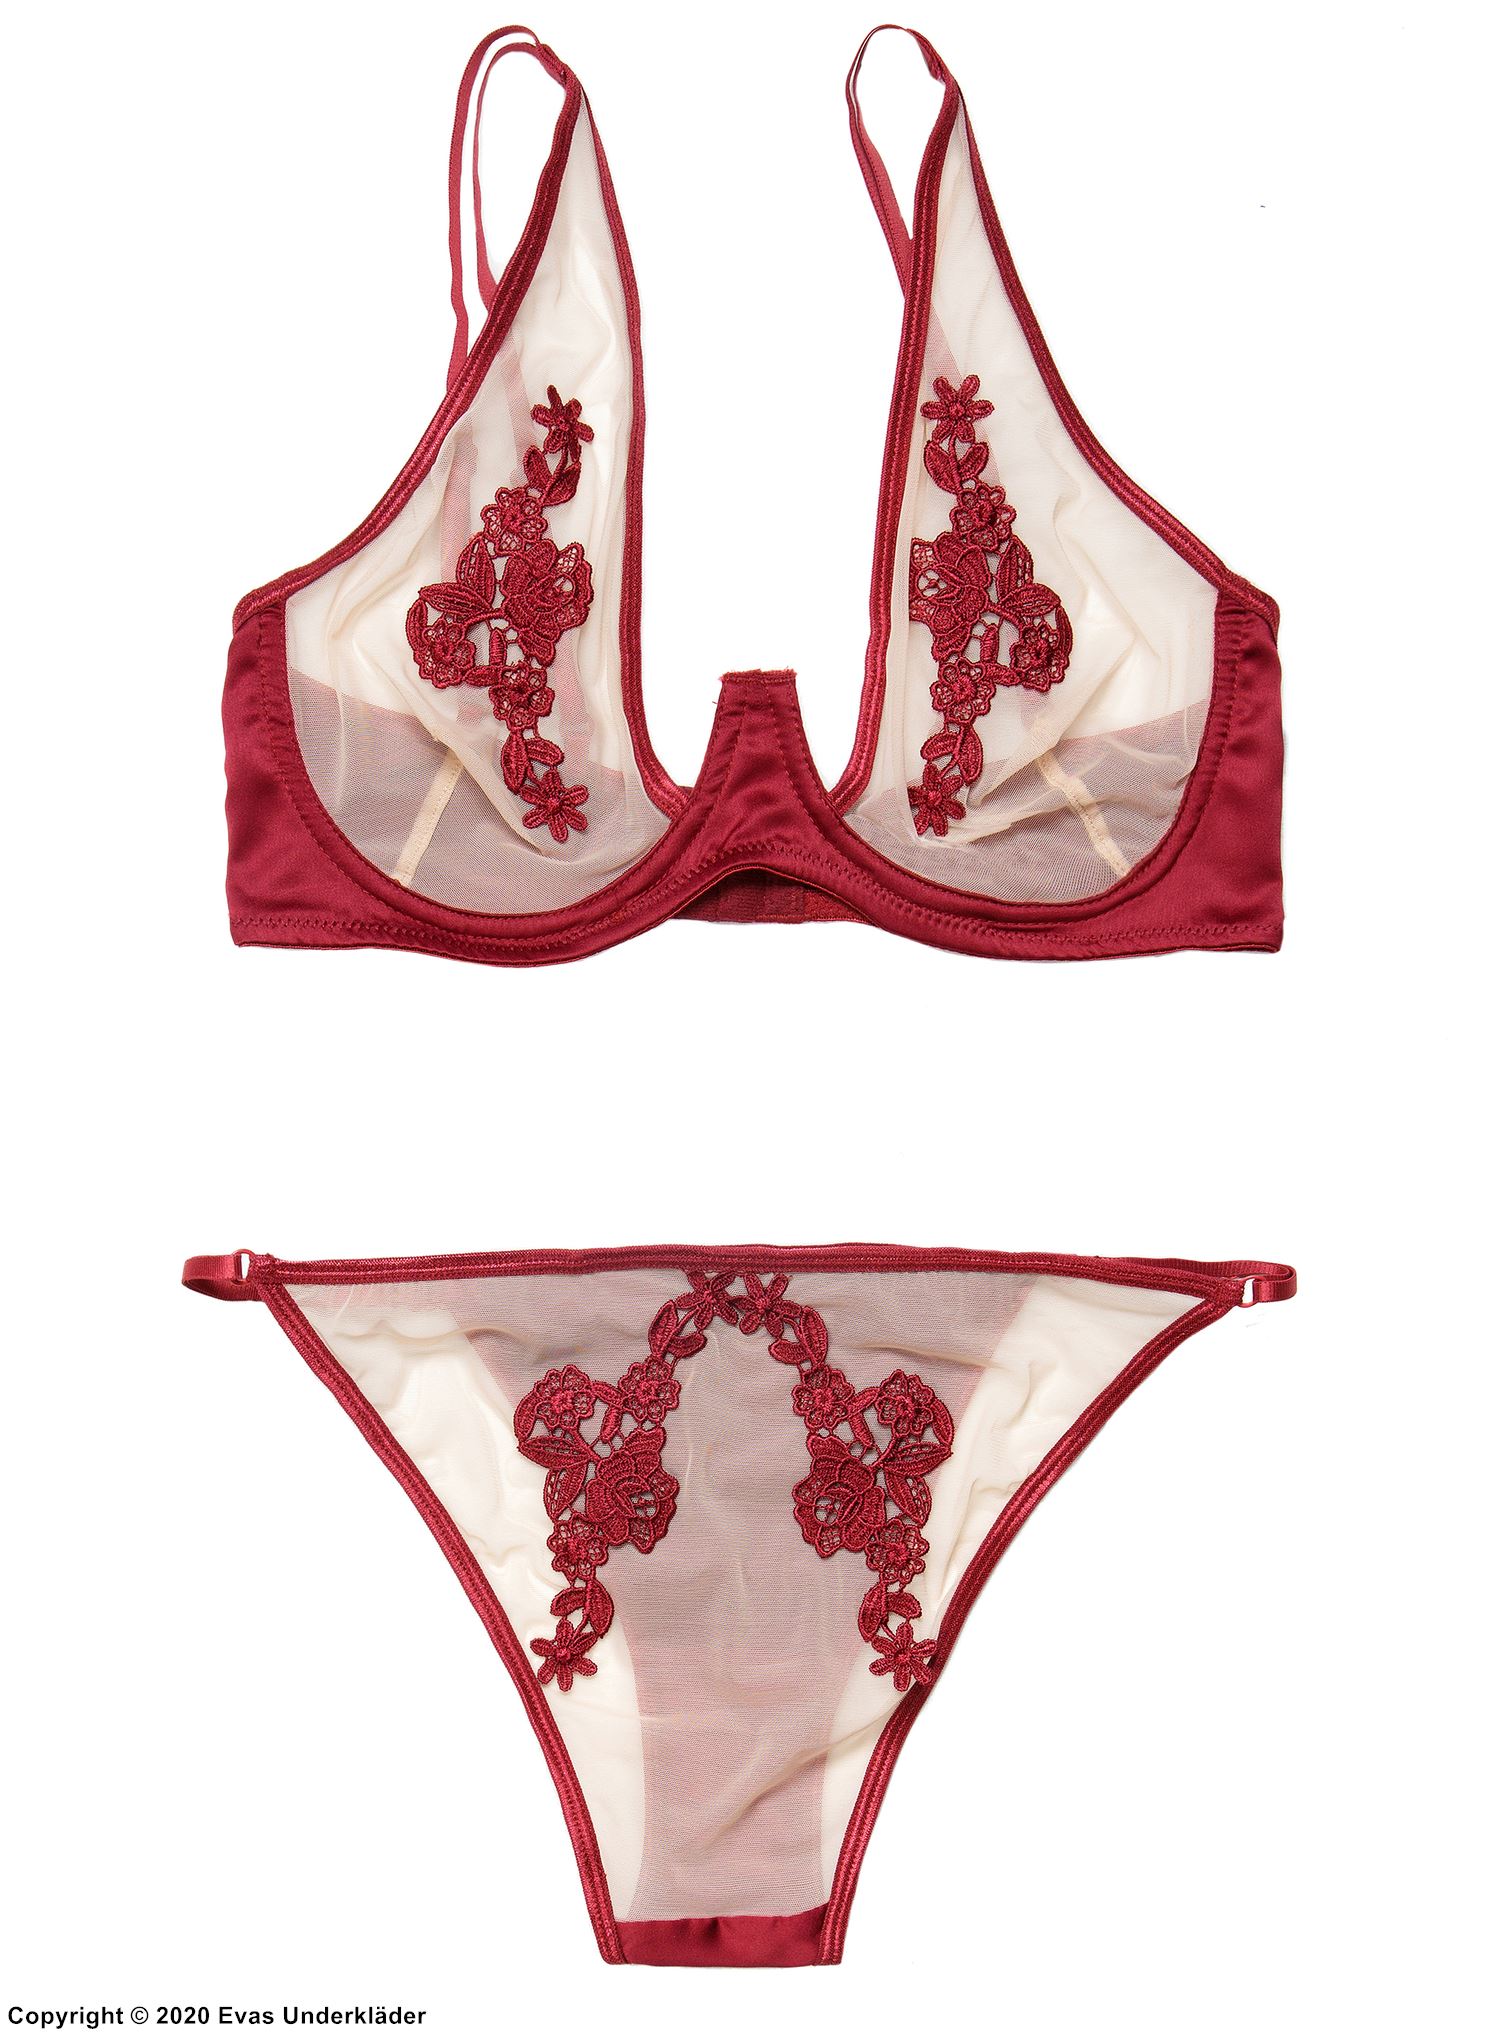 Romantic lingerie set, sheer nylon, satin inlay, lace application